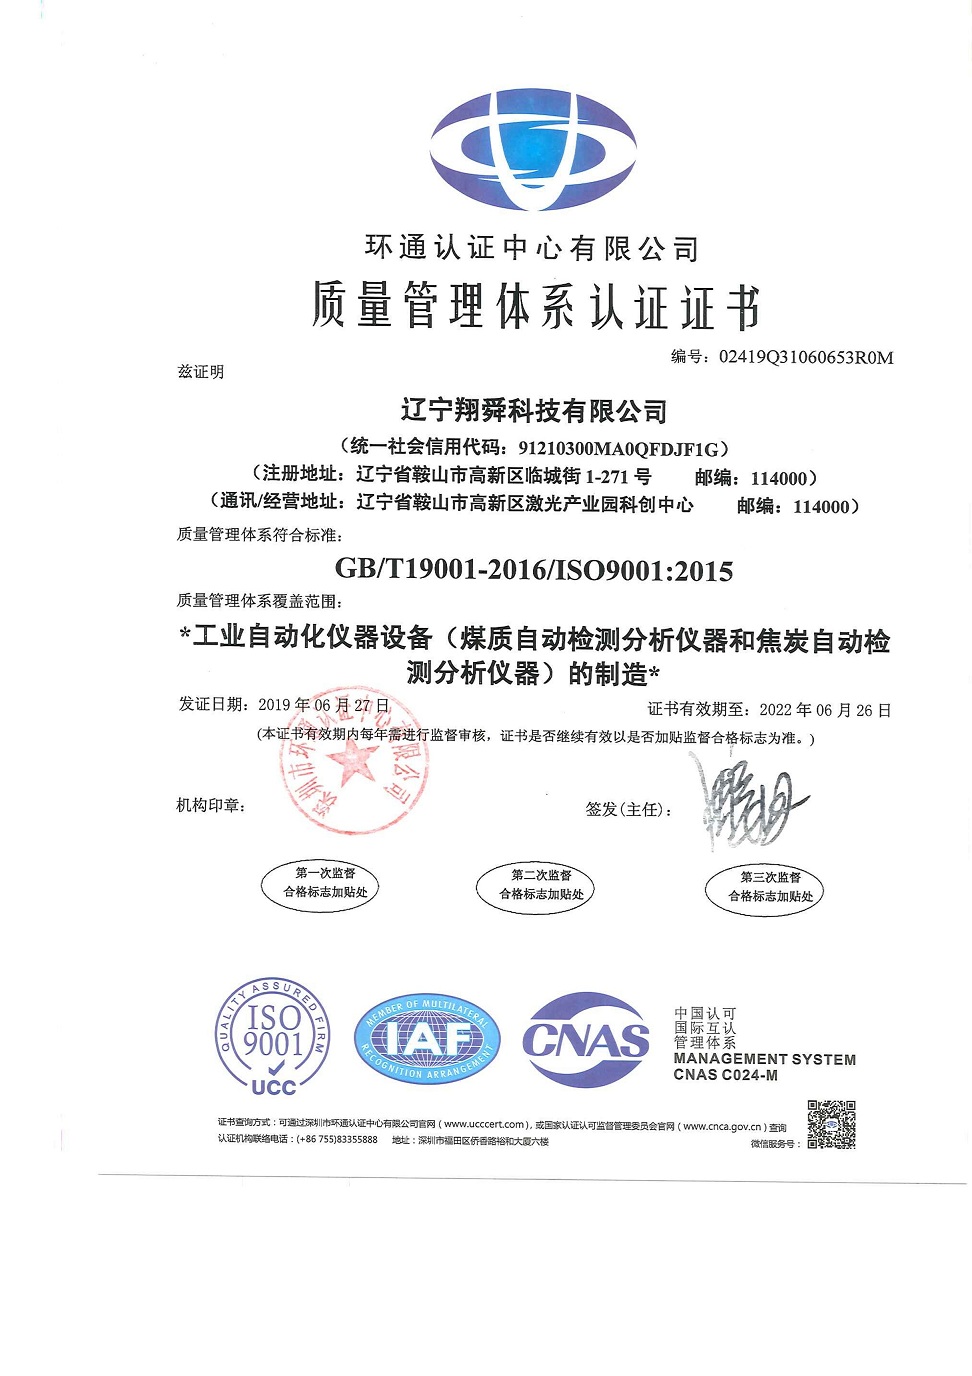 International standard certification